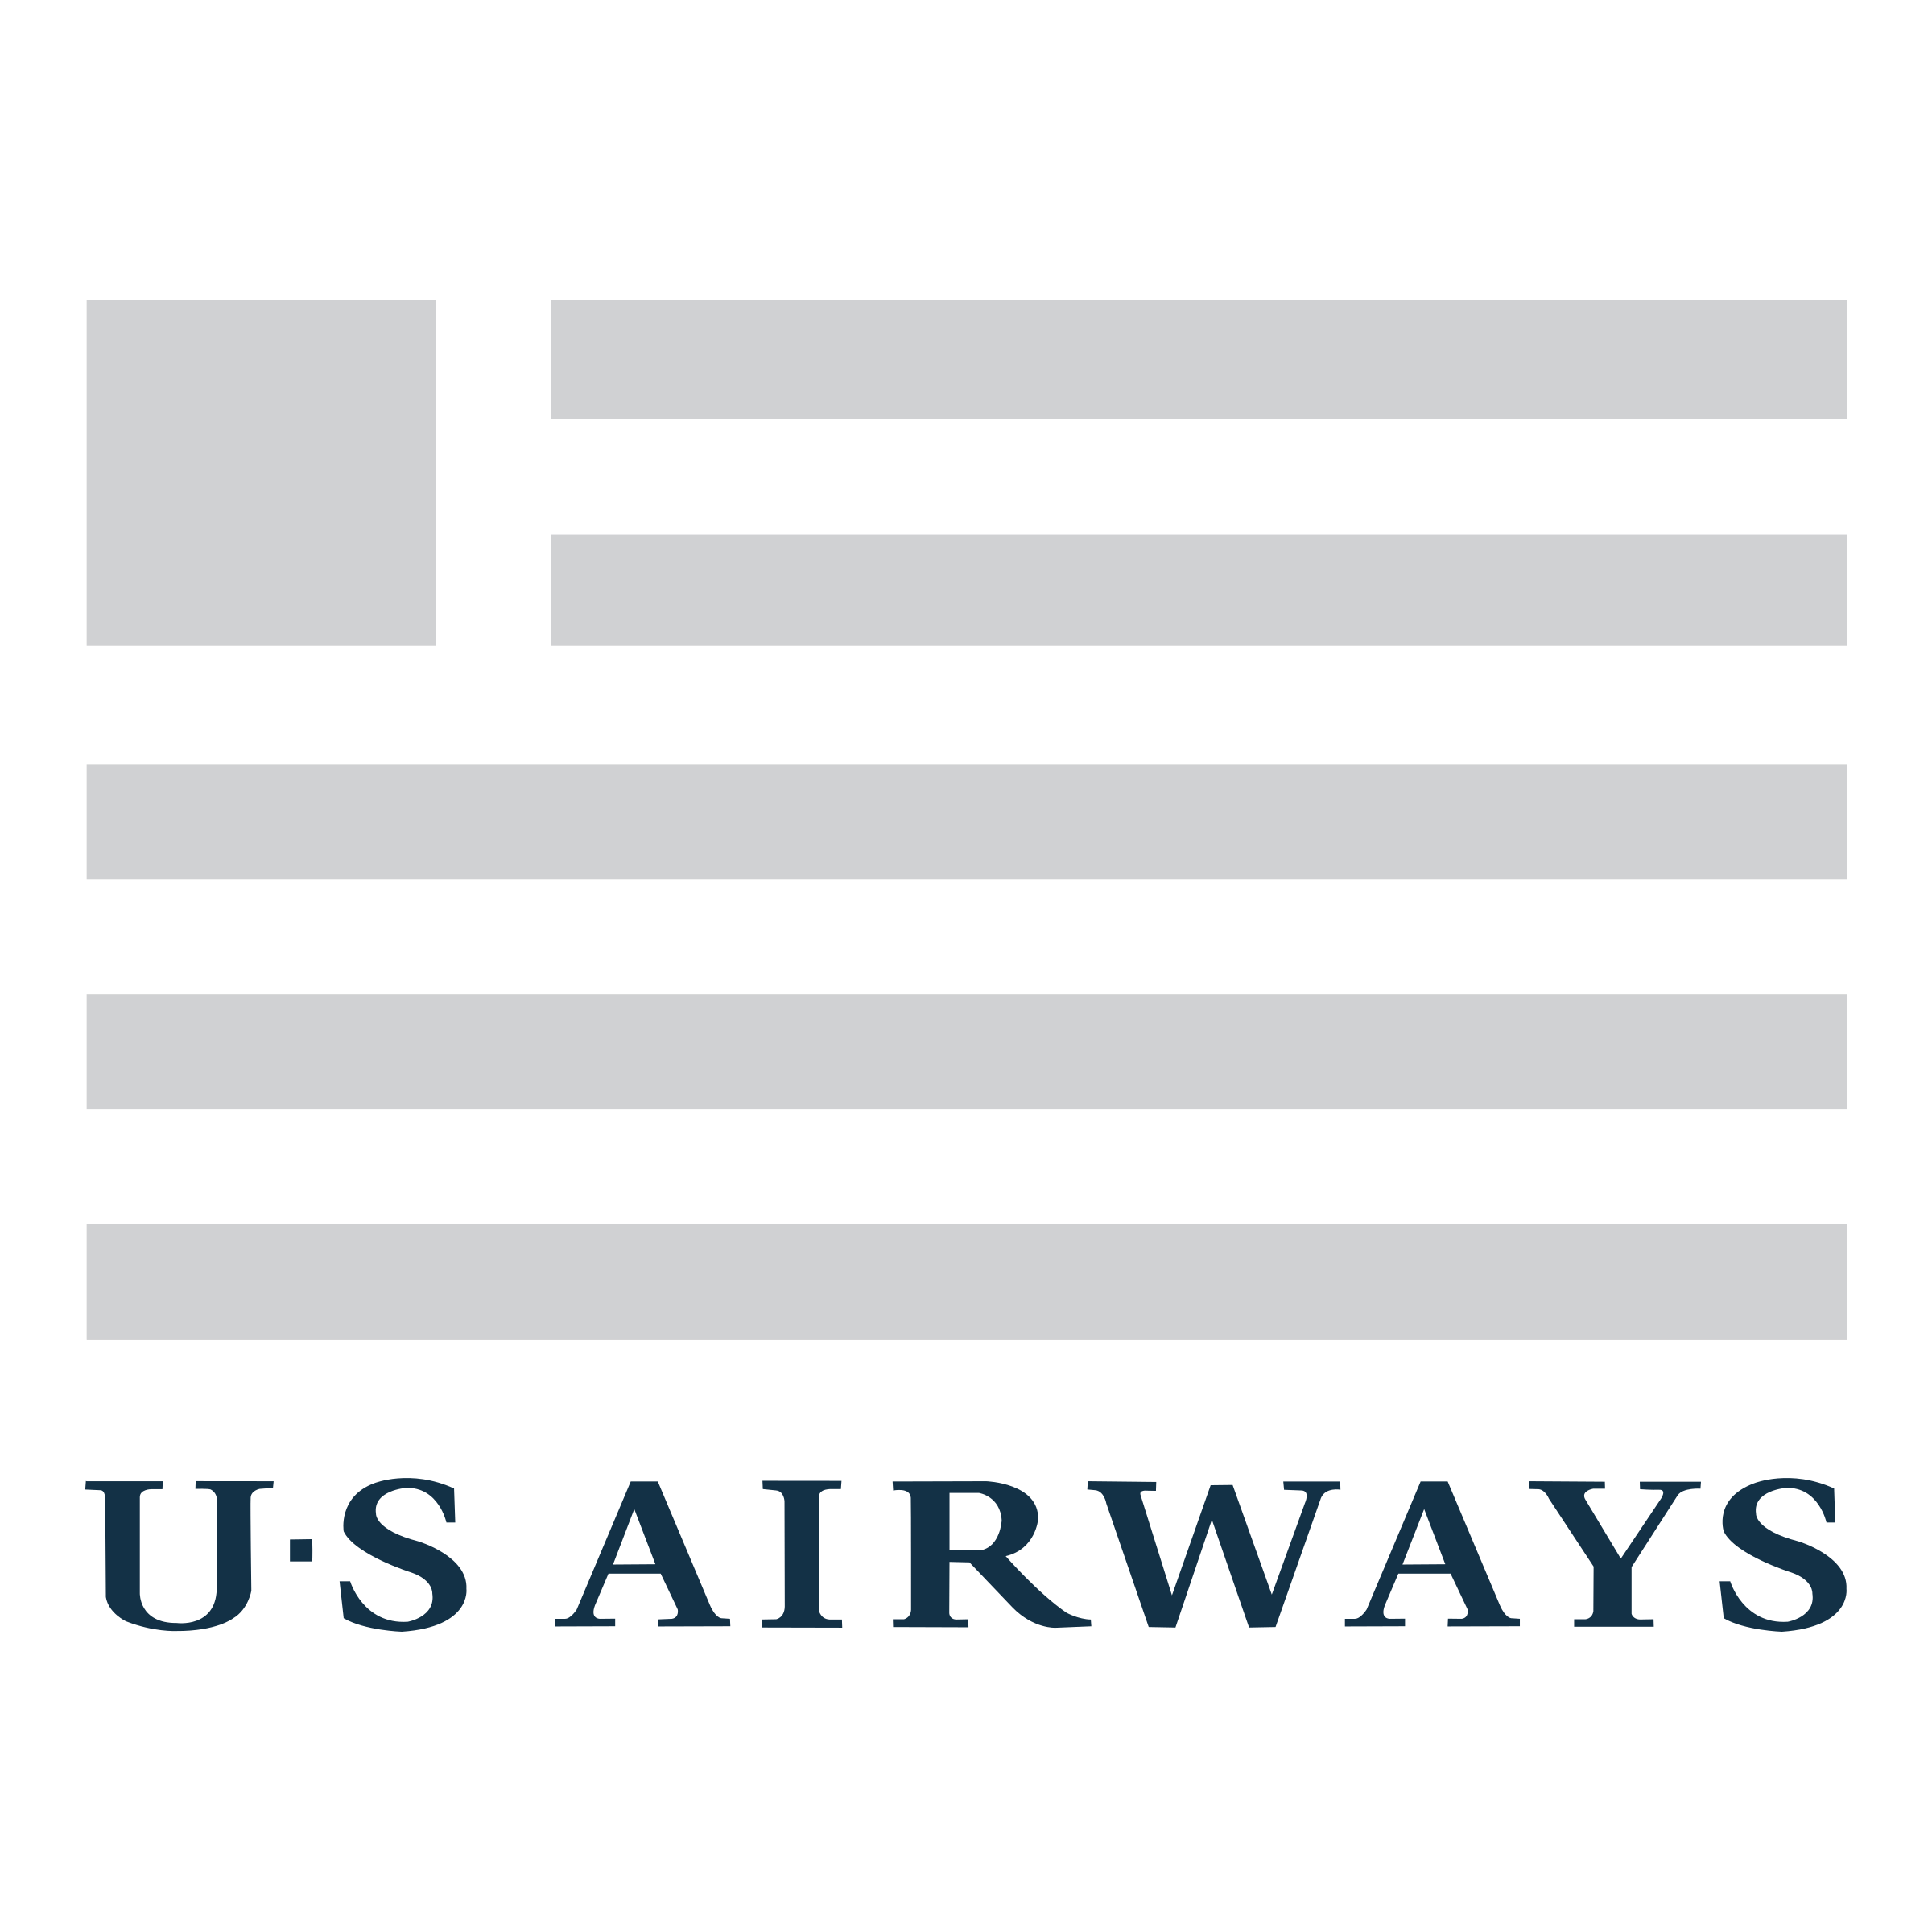 US AIRWAYS